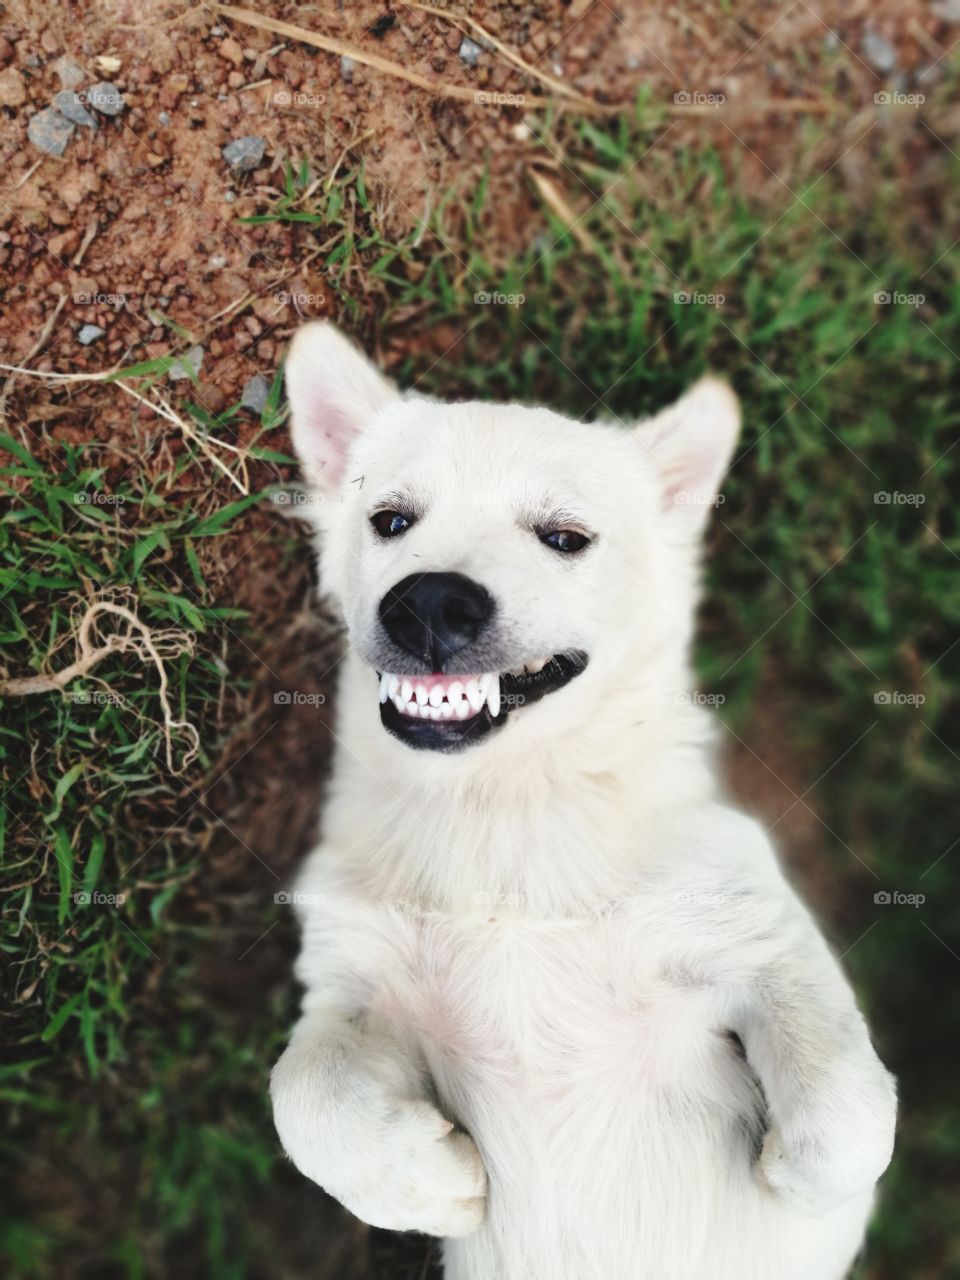 smile dog